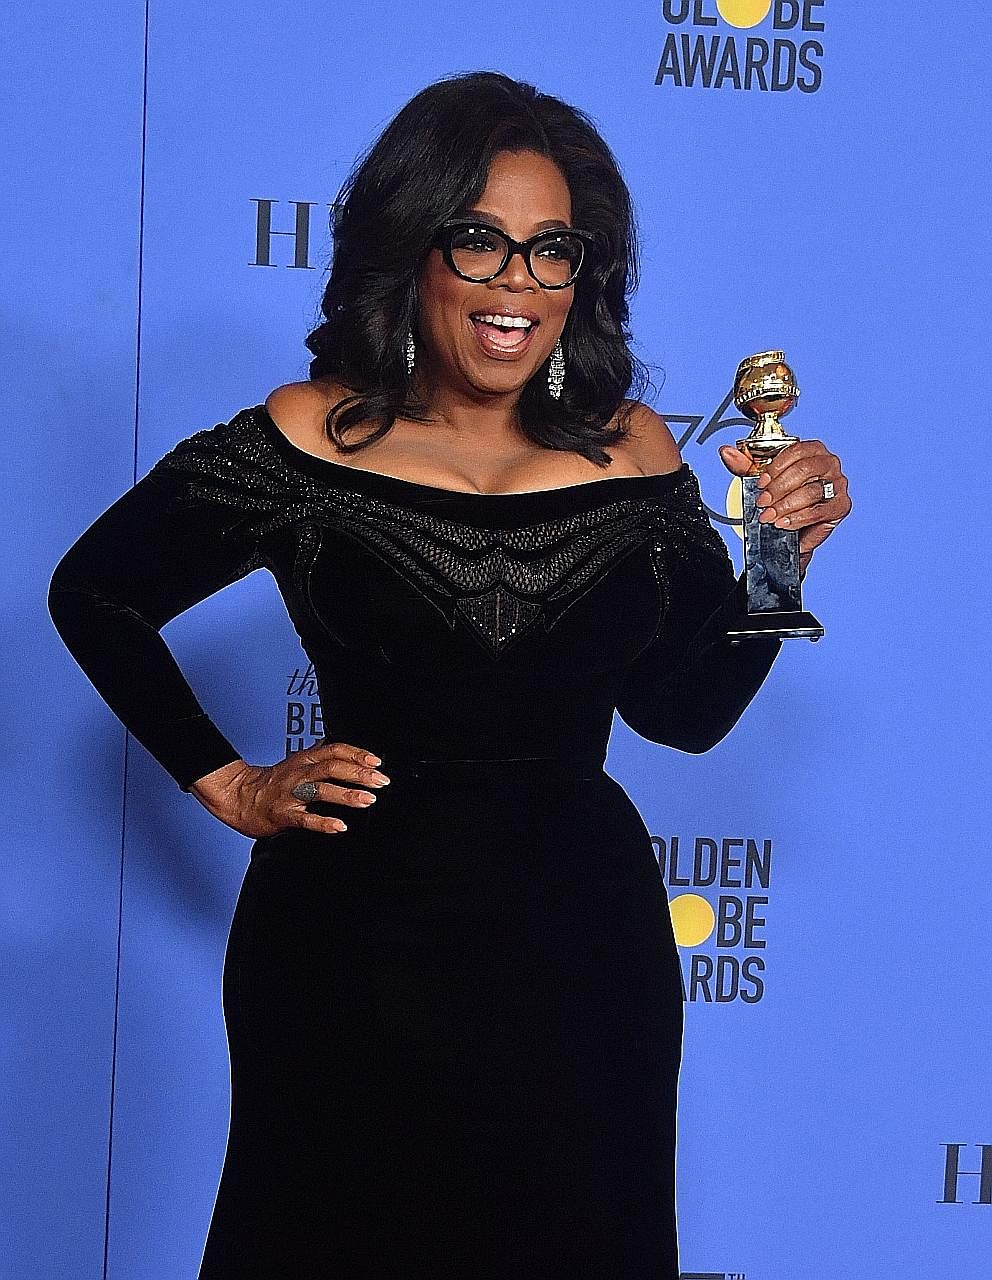 Oprah Winfrey during the 75th Golden Globe Awards on Jan 7. Her speech sparked calls for her to run for president in 2020.